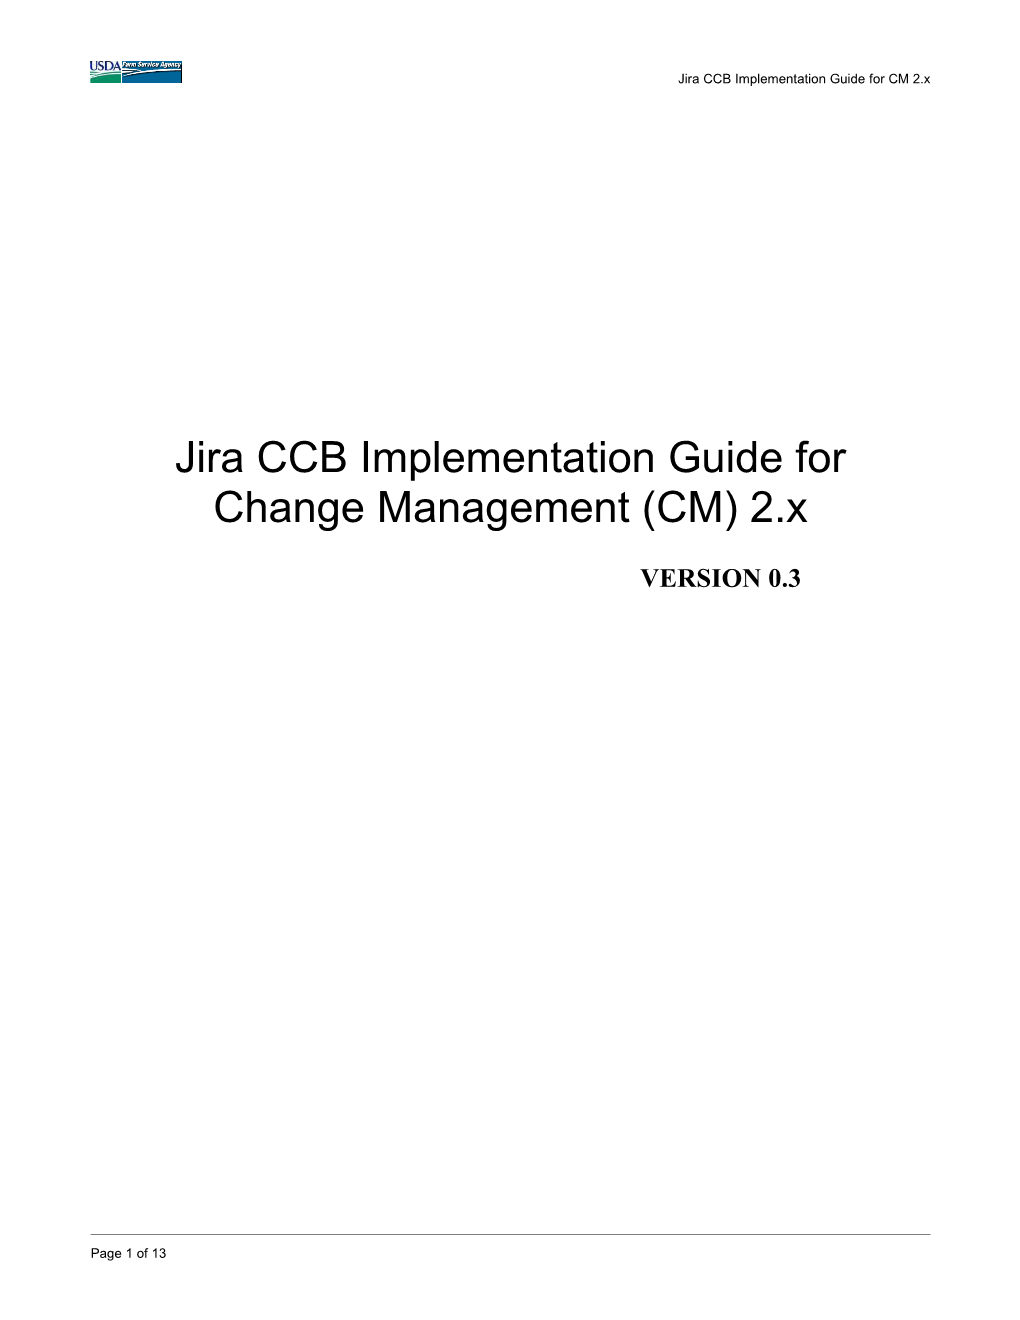 FSA Change Management Plan: JIRA Implementation